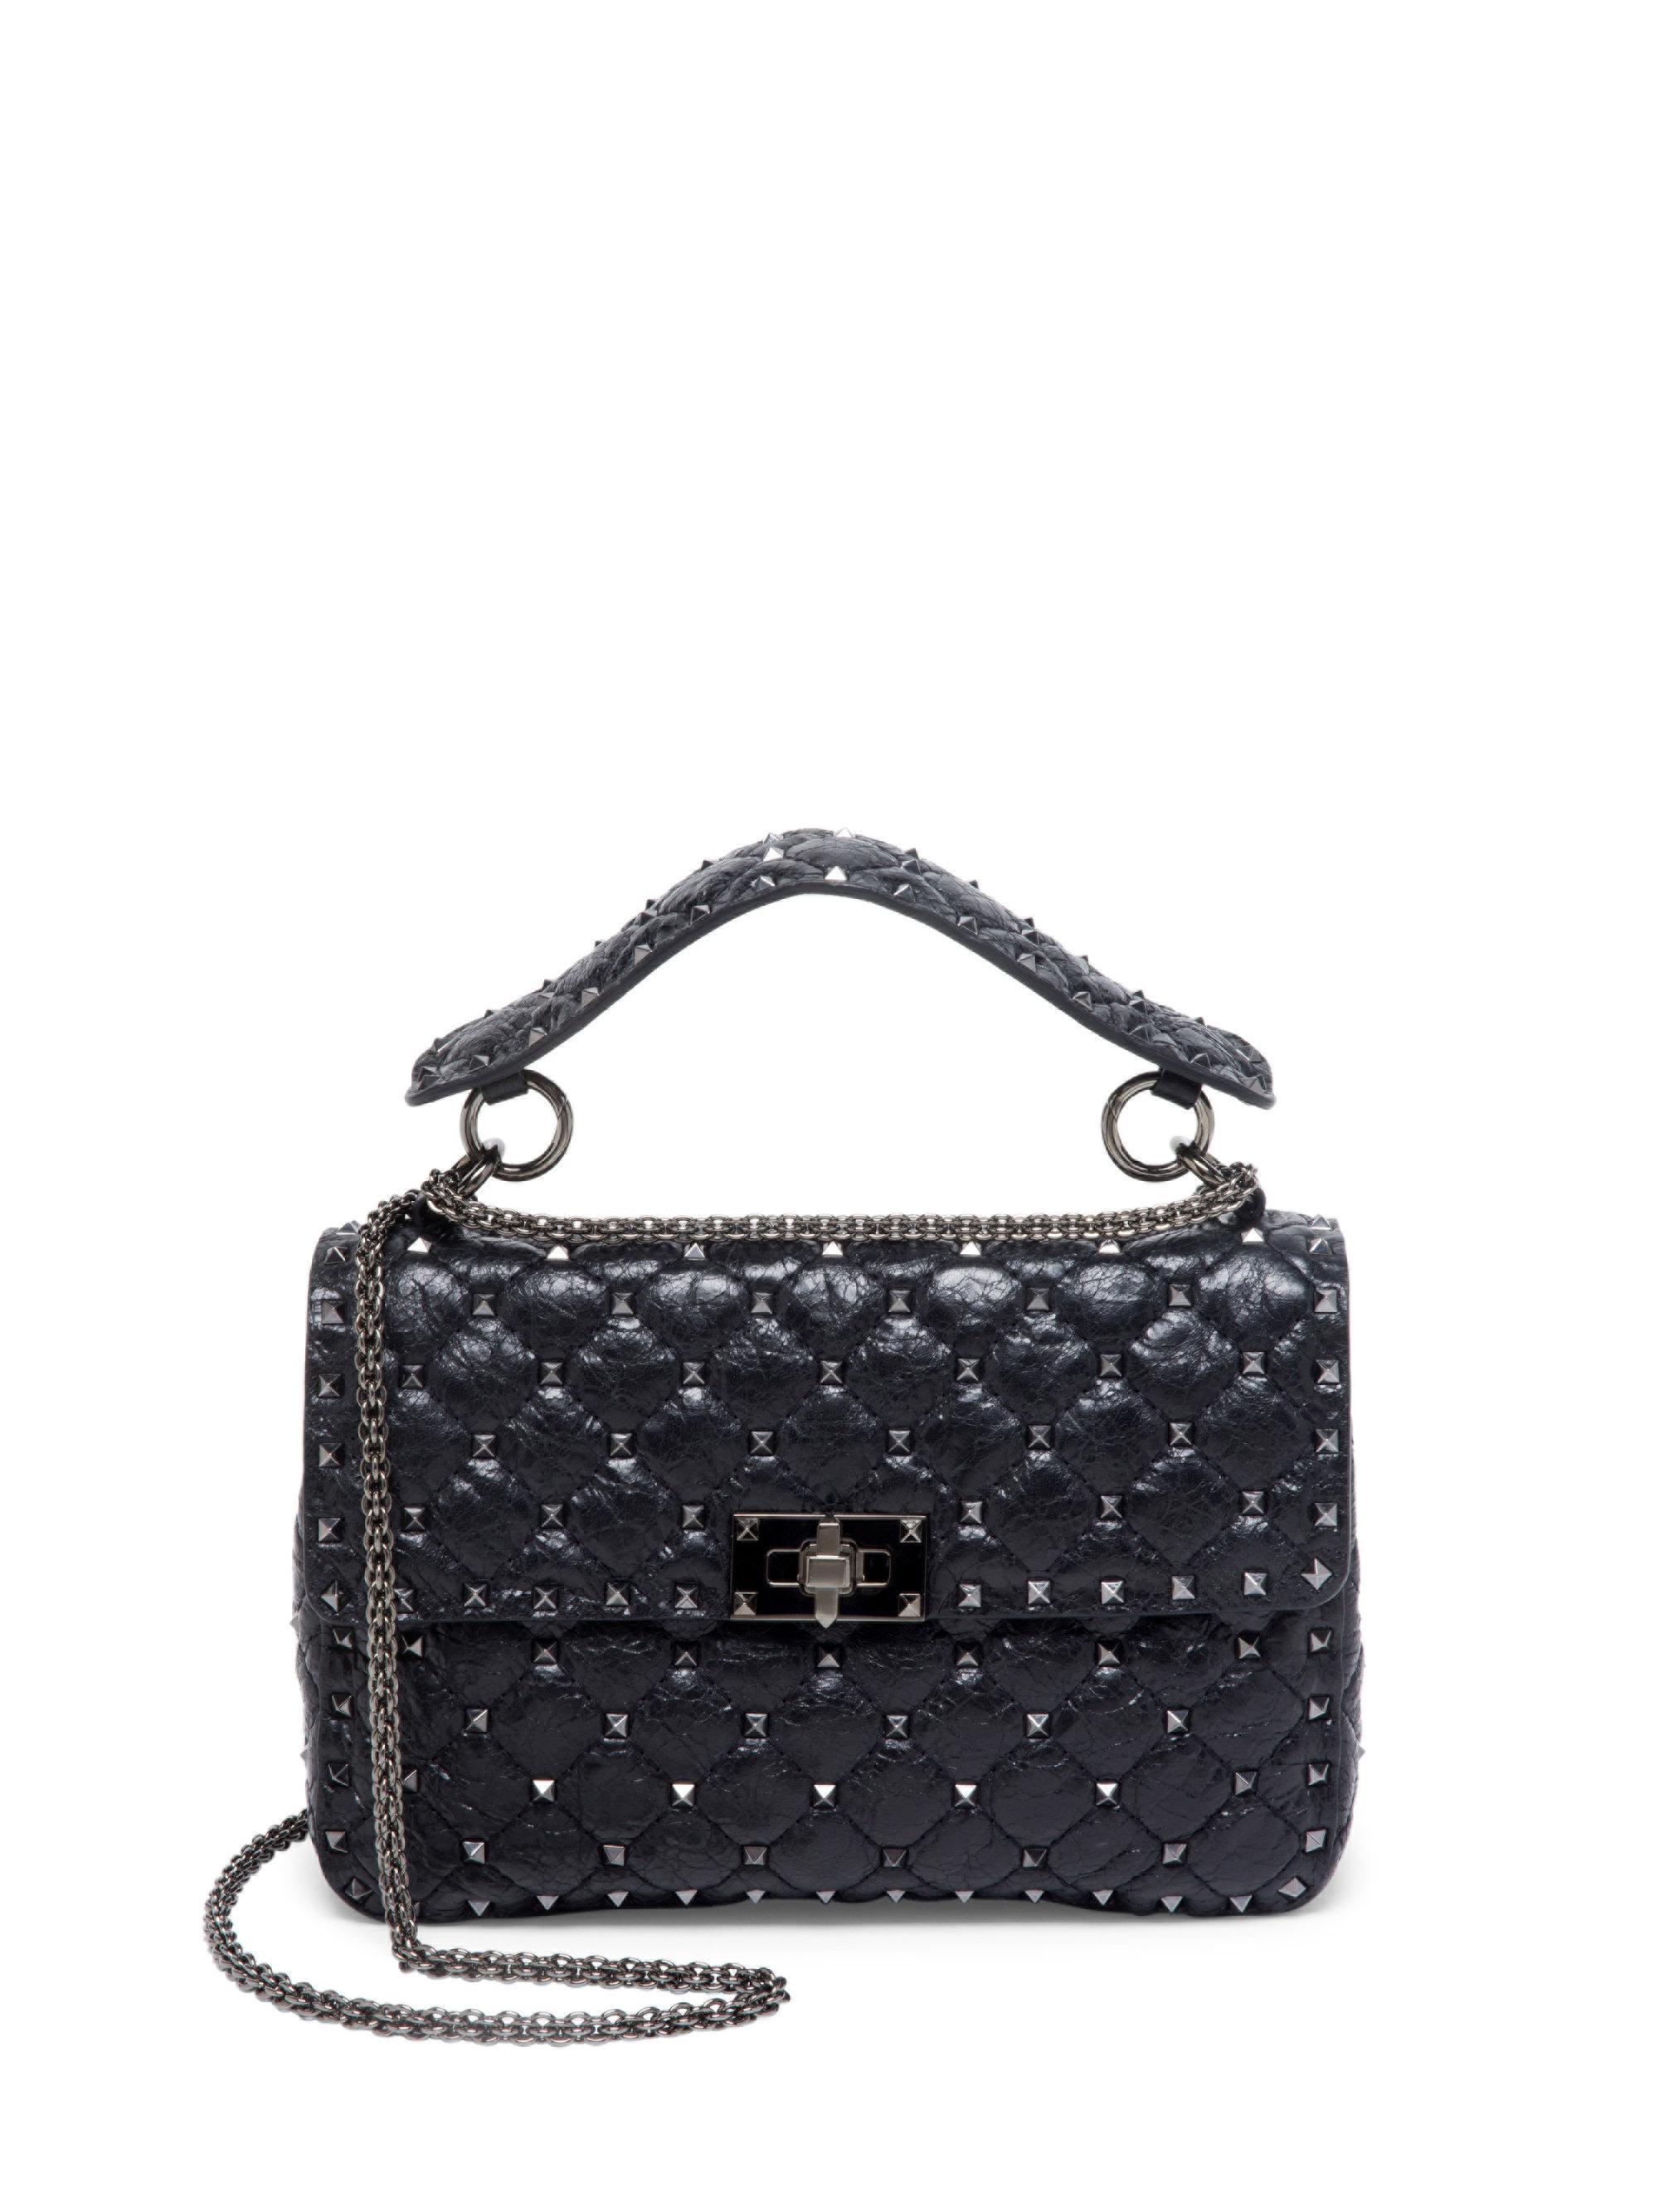 Saks Fifth Avenue Valentino Handbags | SEMA Data Co-op